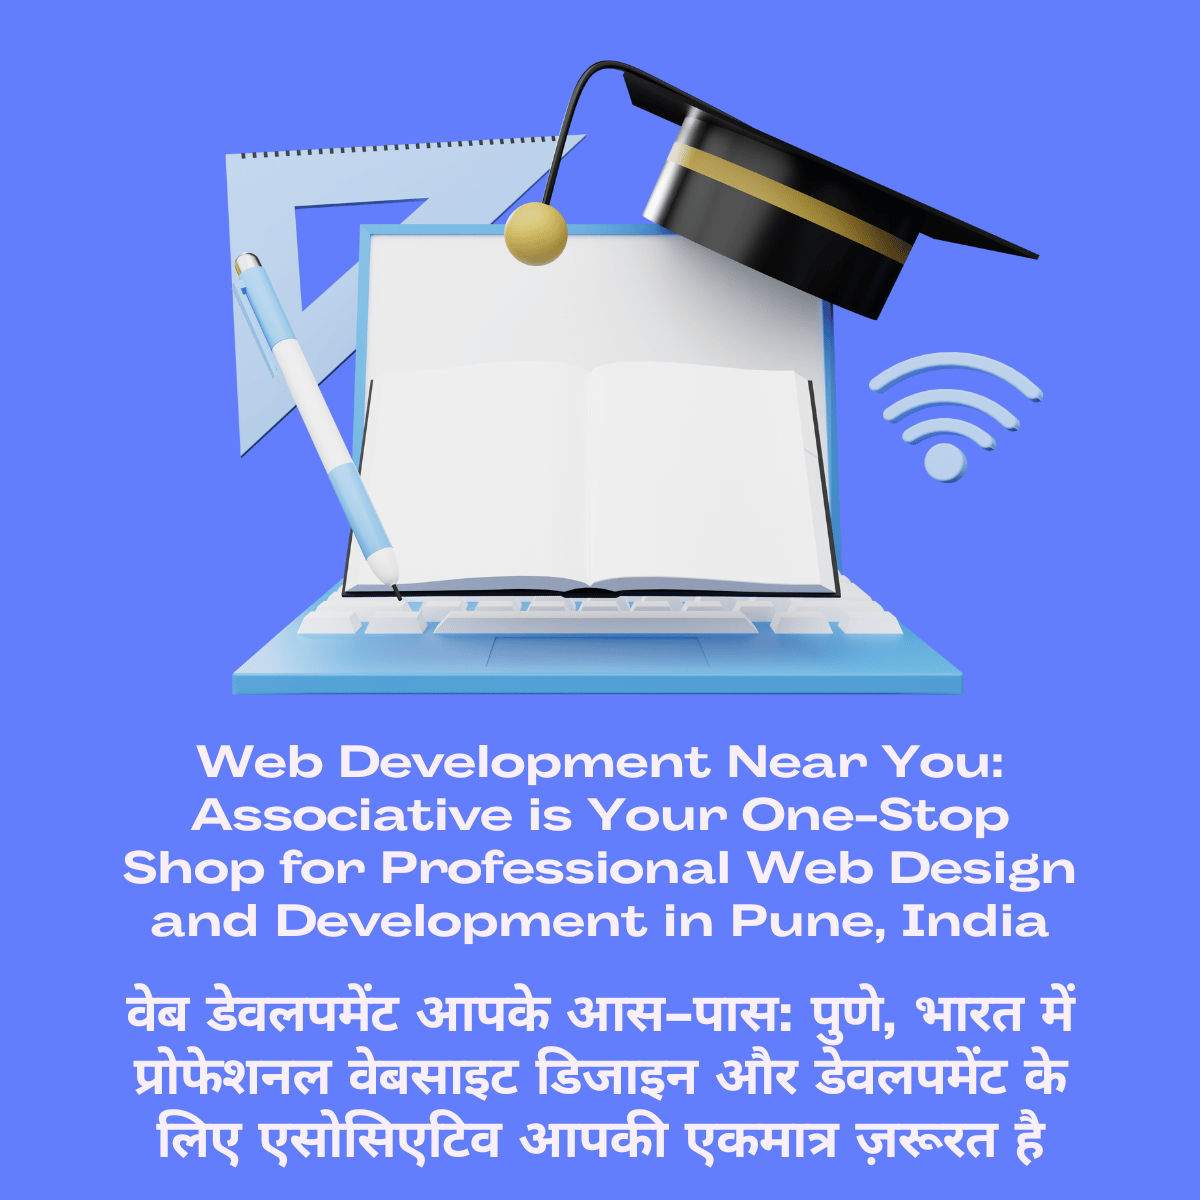 Web Development Near You: Professional Web Design and Development